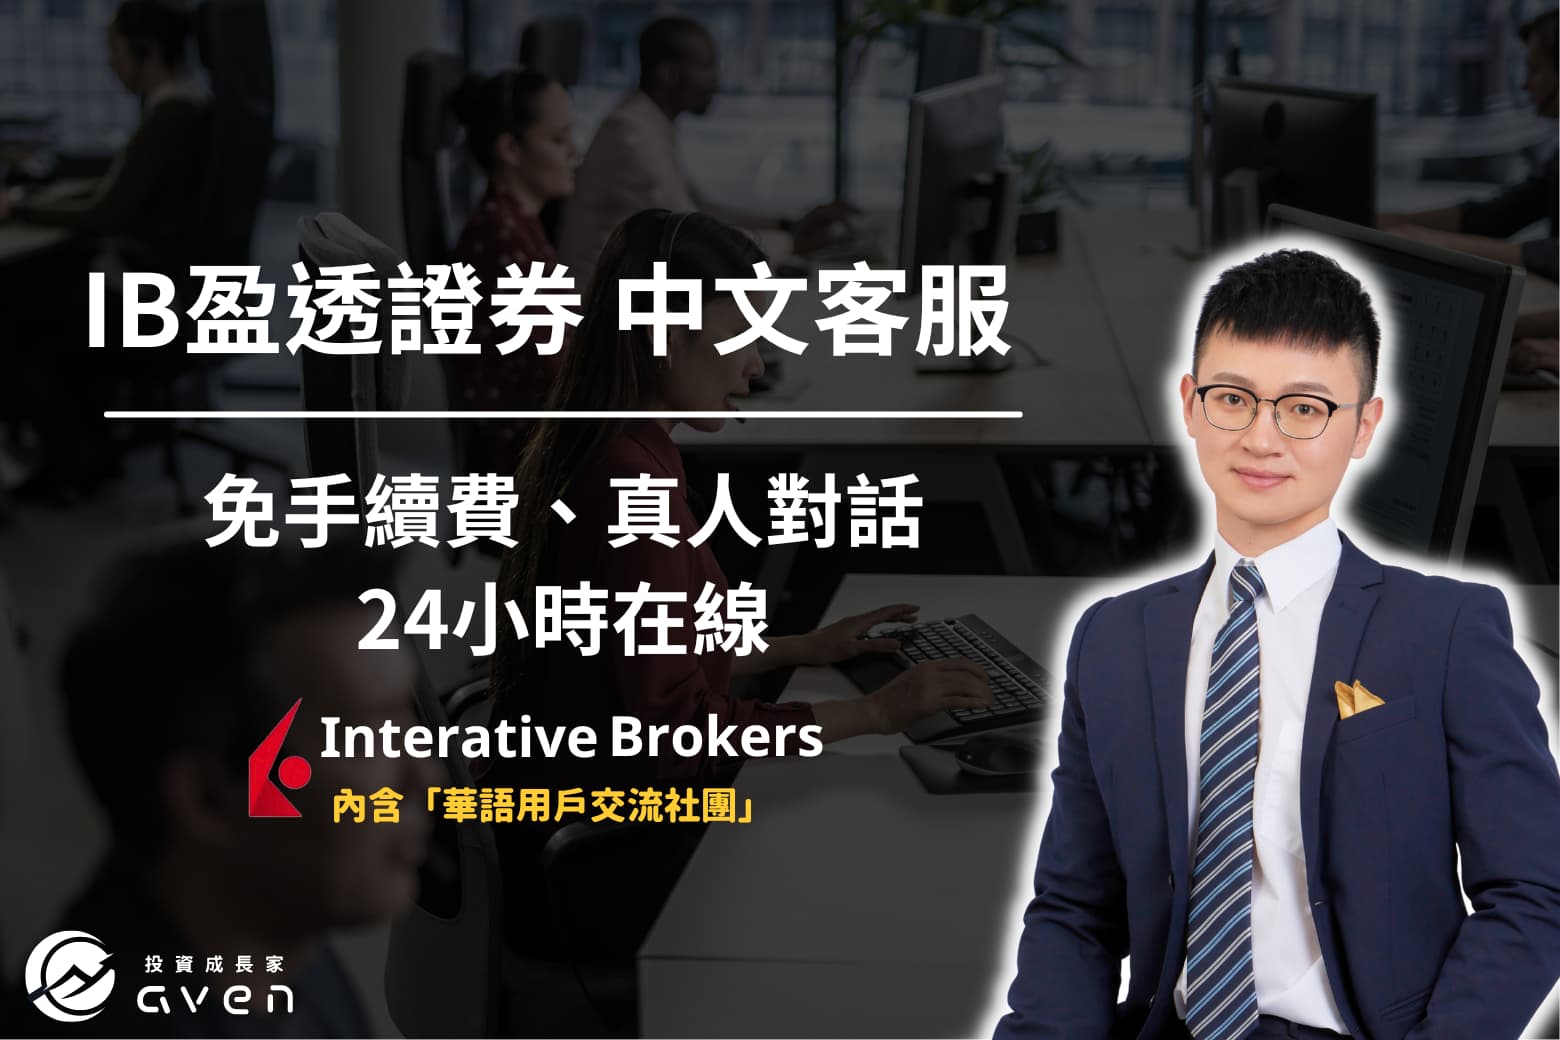 IB盈透證券 interactive brokers 台灣中文客服 大